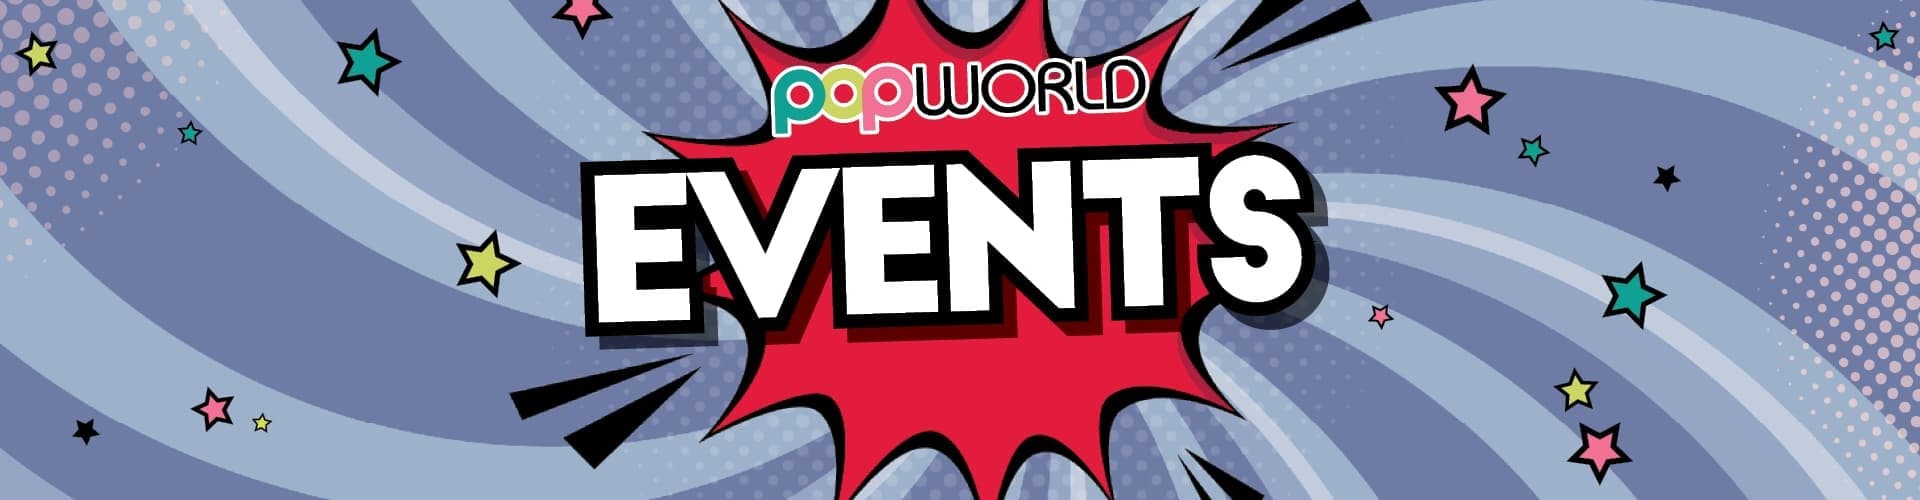 Events at Popworld Liverpool